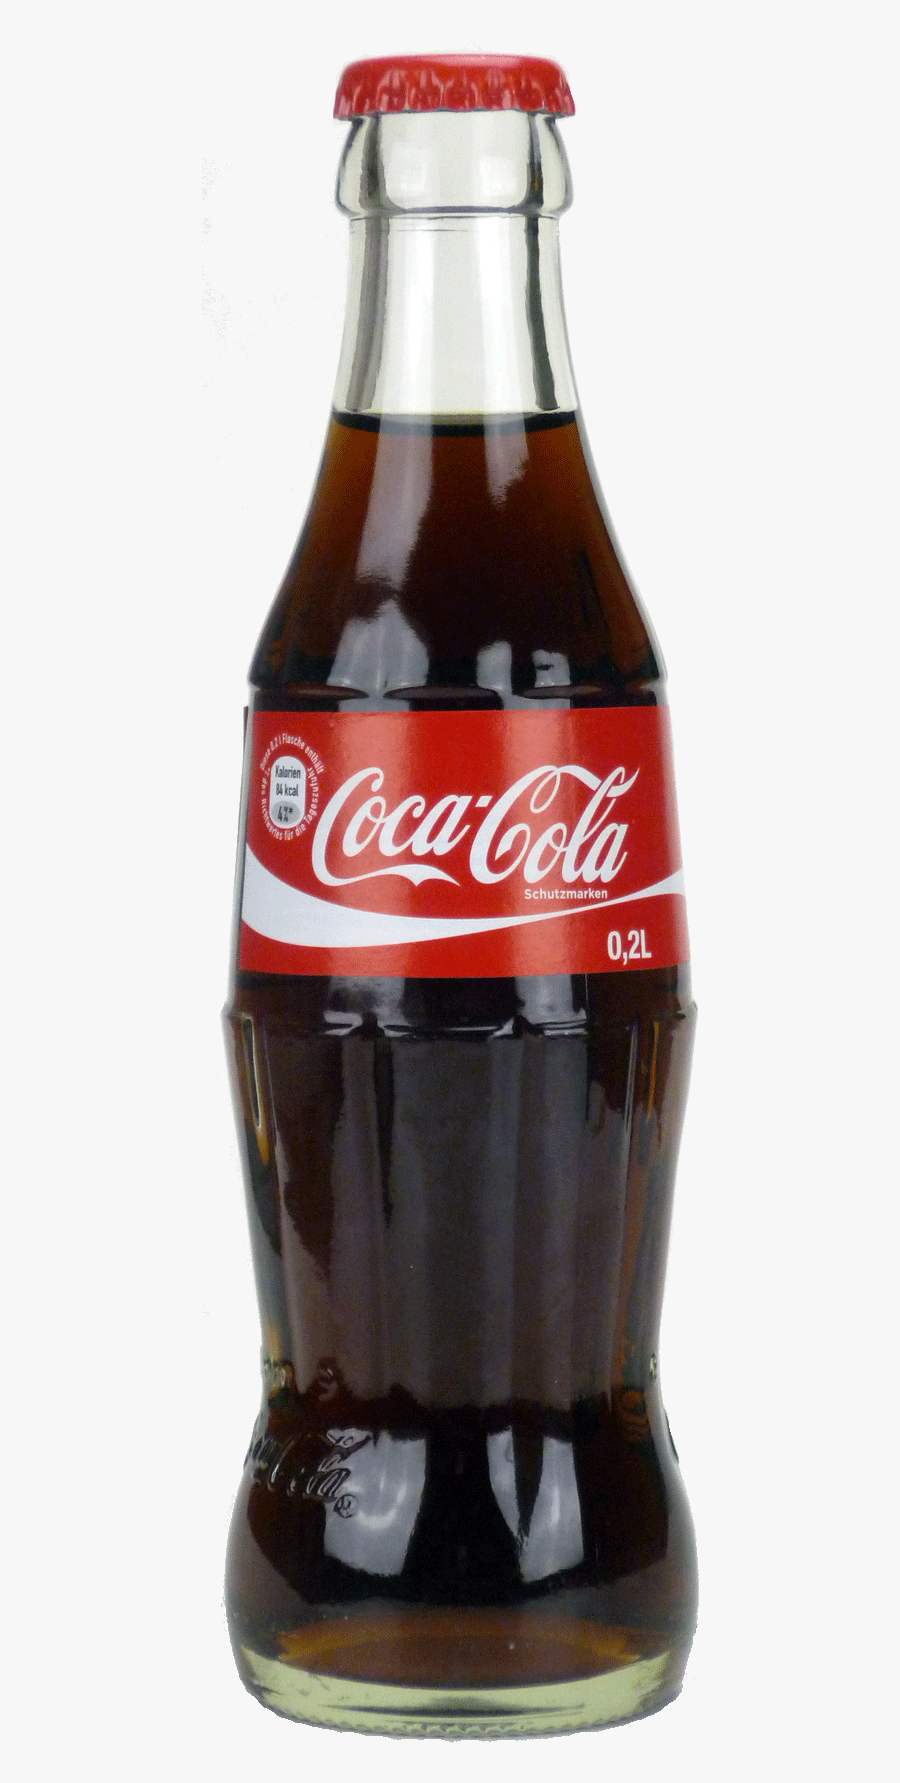 Coca-cola Free Download Png - Coca Cola Bottle Png, Transparent Clipart